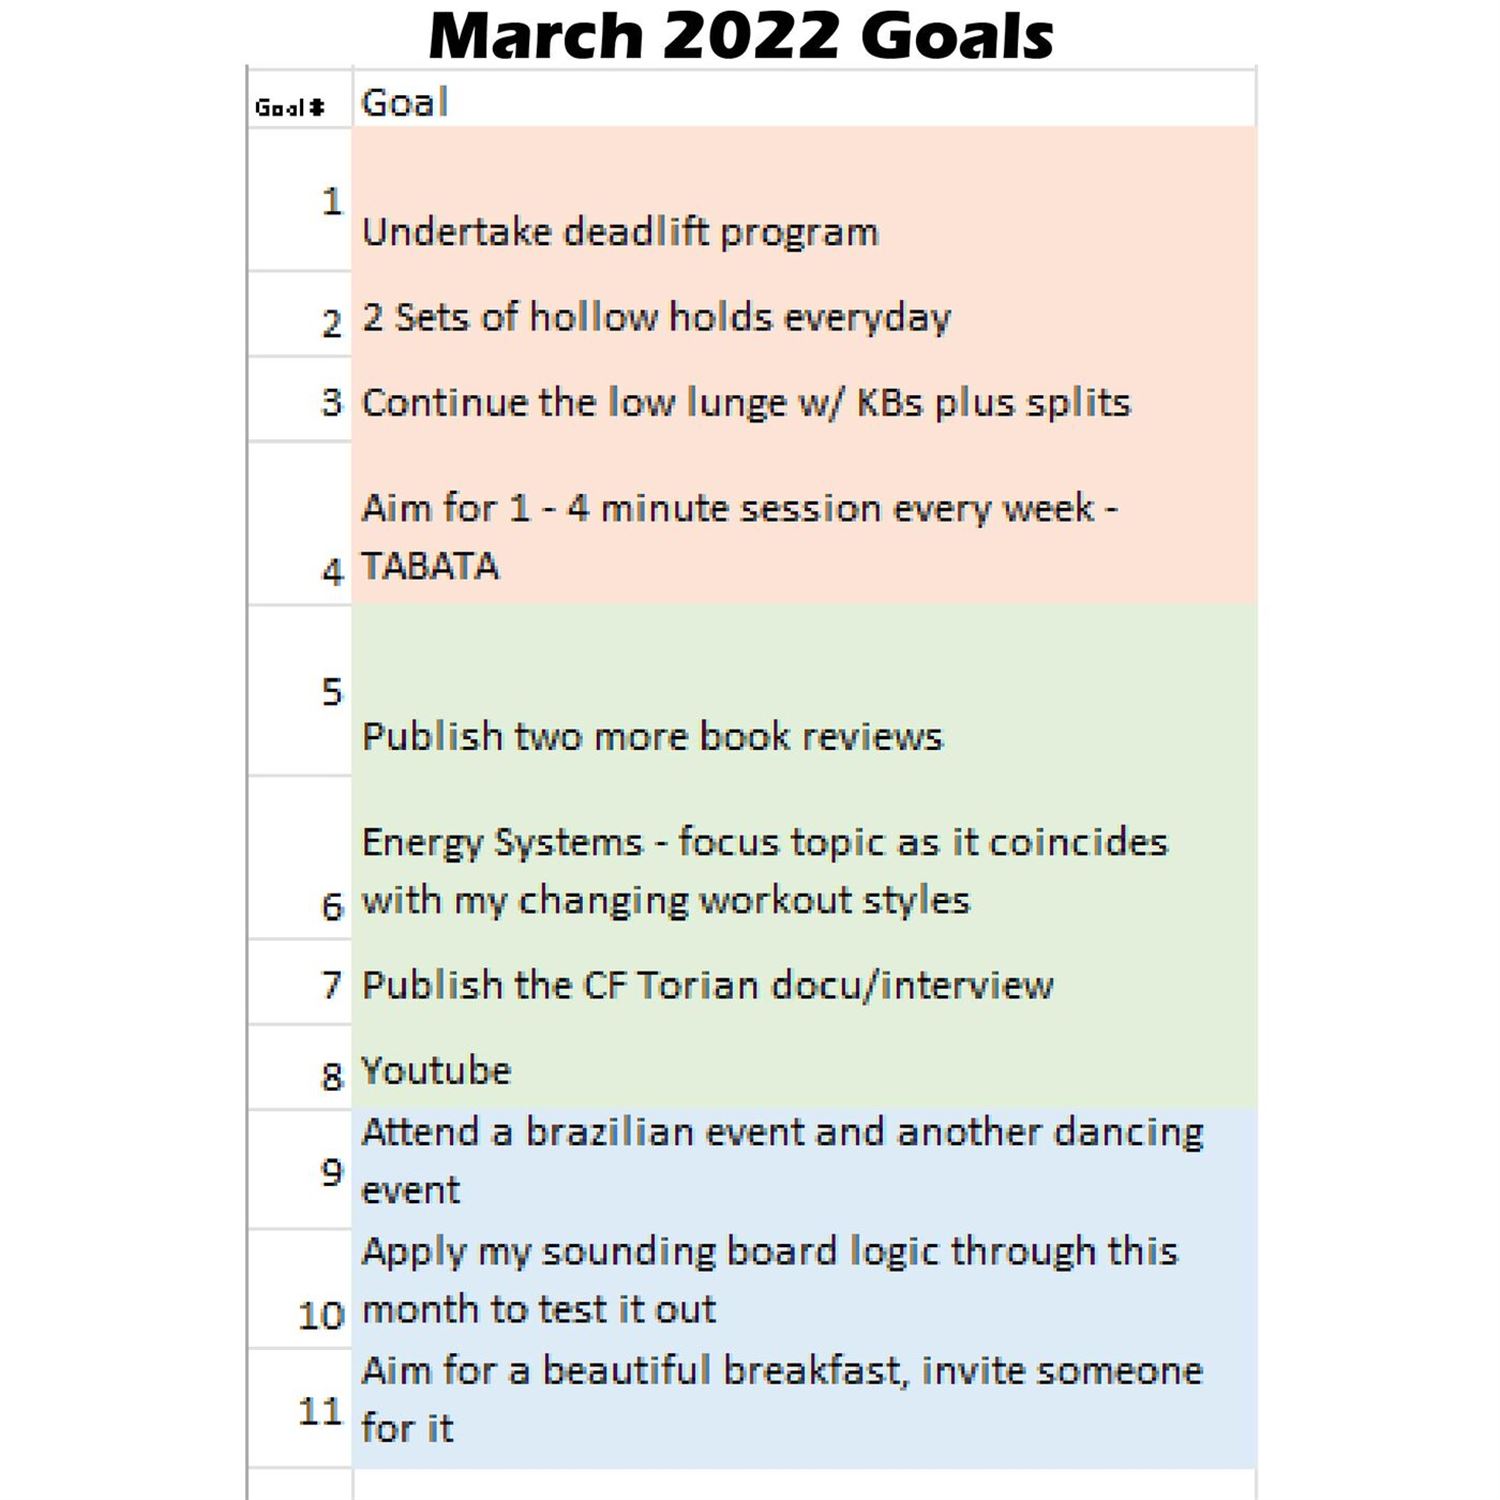 Juan's March Goals - Body